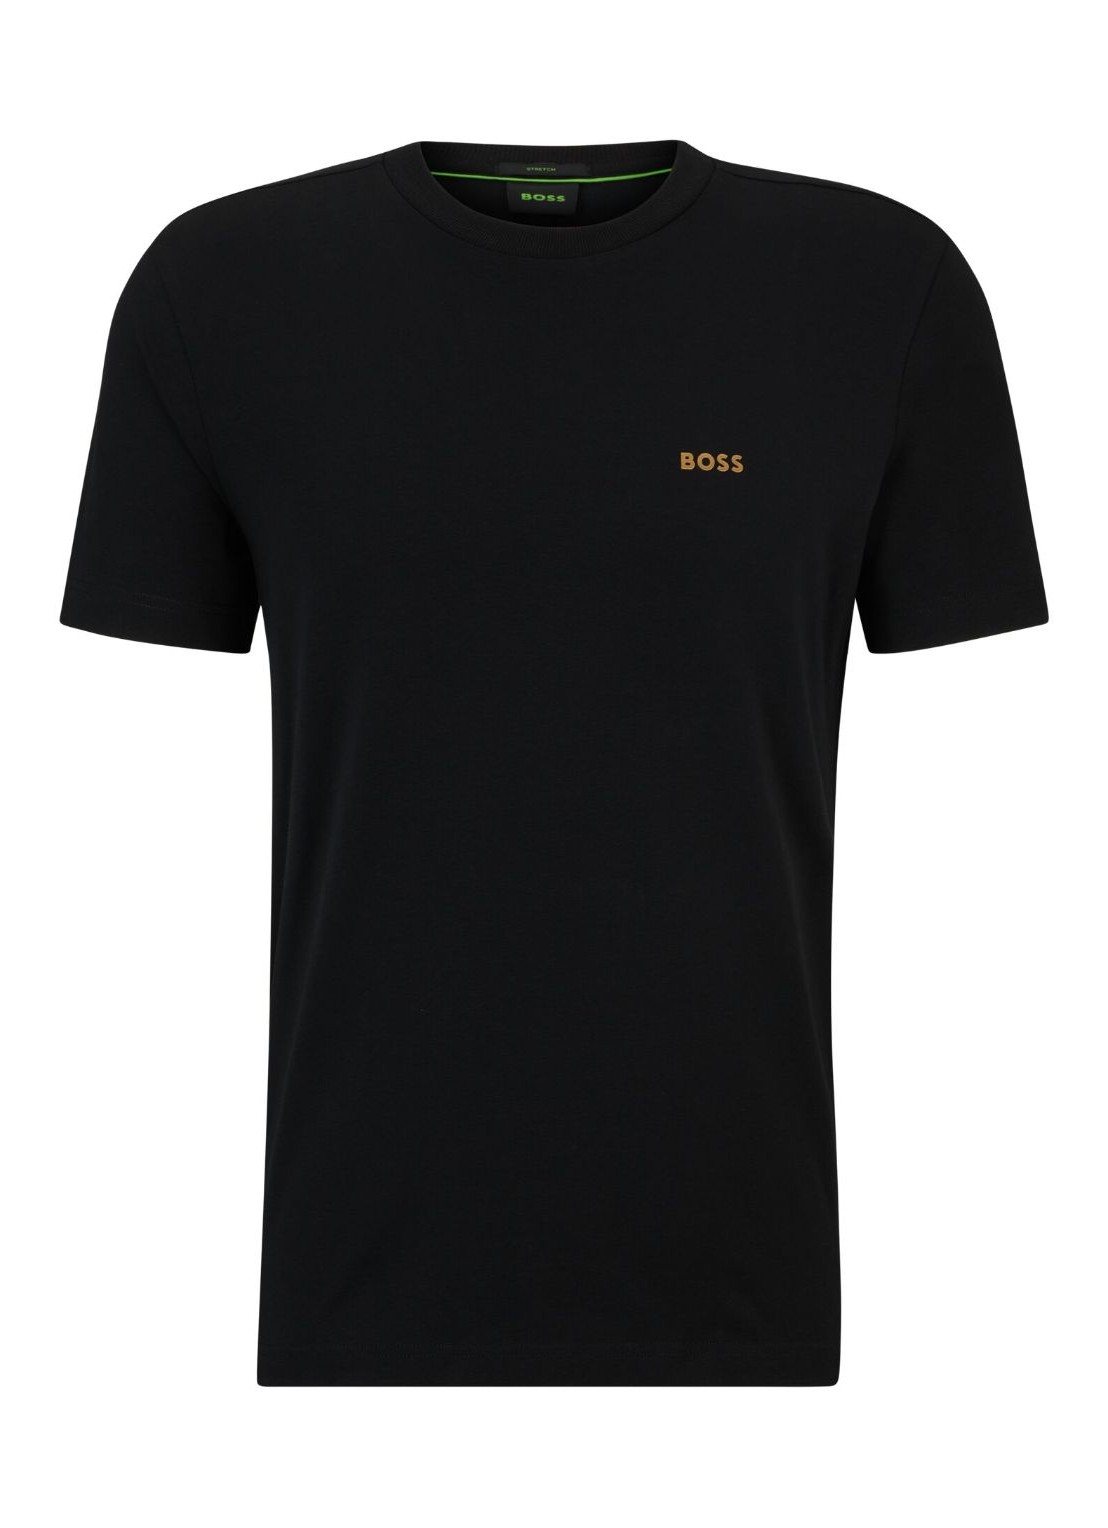 Camiseta boss t-shirt mantee - 50506373 002 talla XXL
 